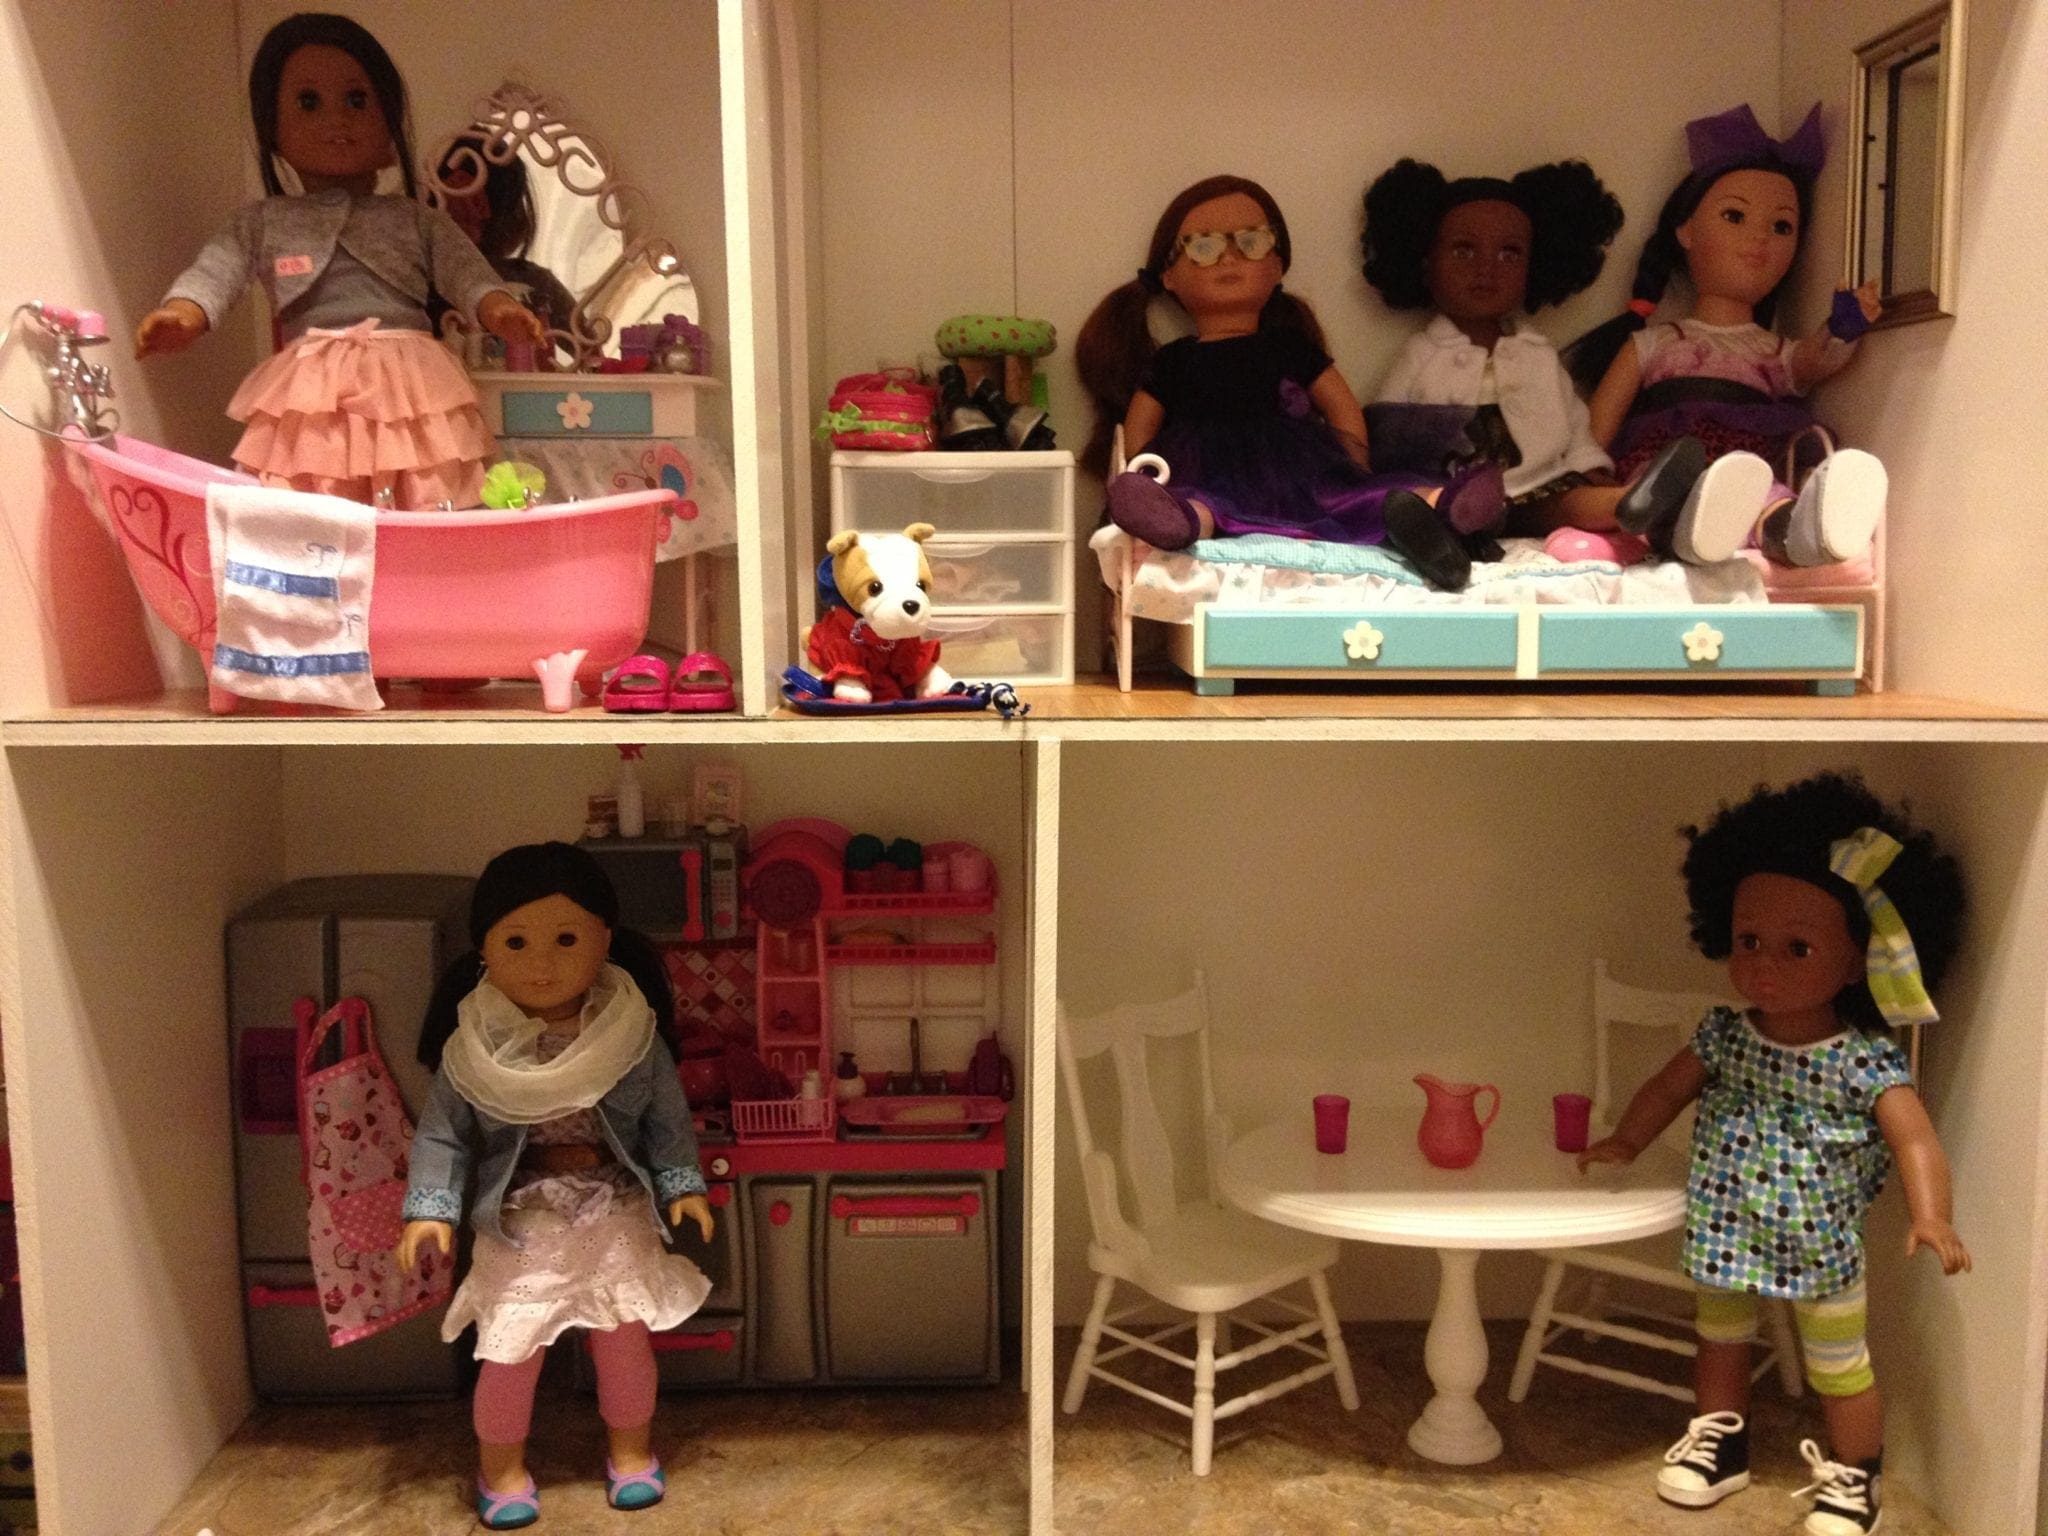 Doll house ideas  Doll house crafts, Barbie doll house, Doll house plans